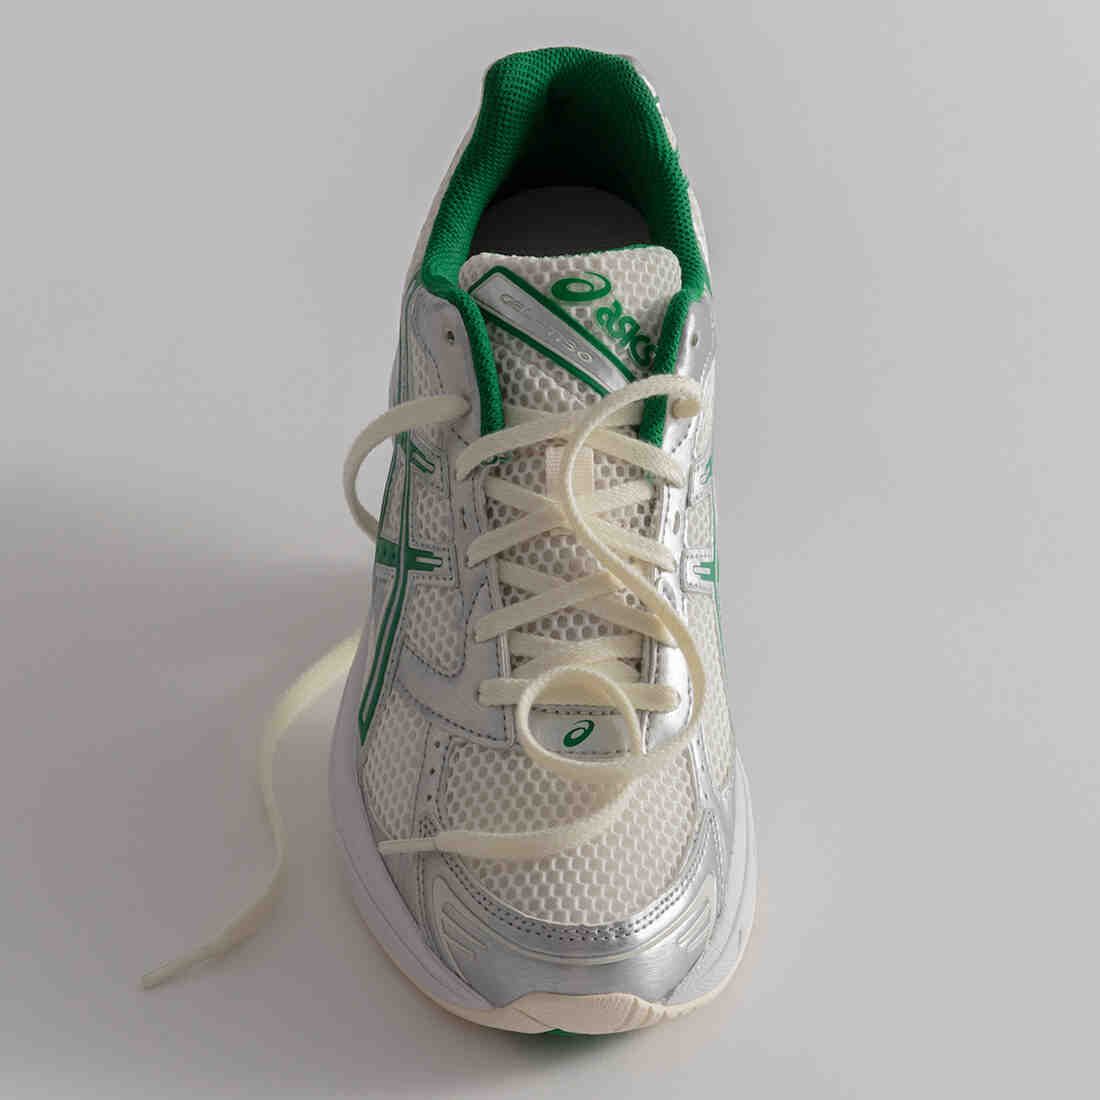 运动鞋, 跑鞋, Kayano, ASICS Gel-1130, Asics Gel, Asics